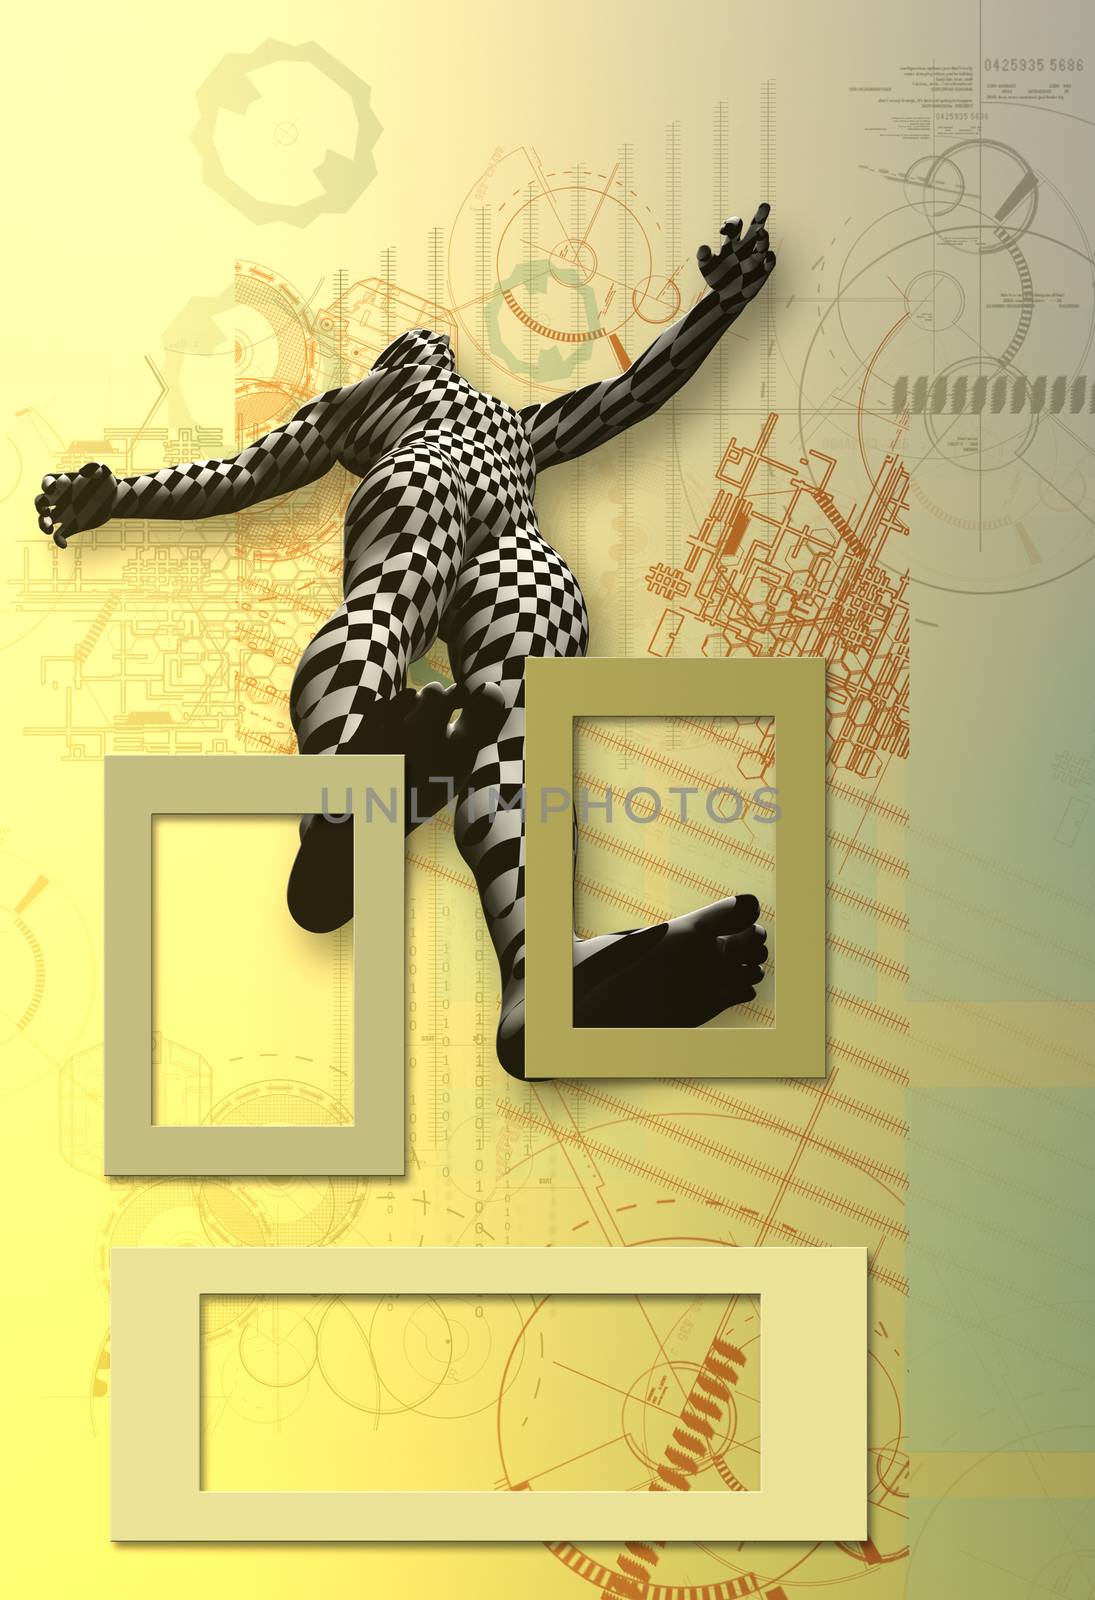 Checkered man on abstract drawing by vitanovski